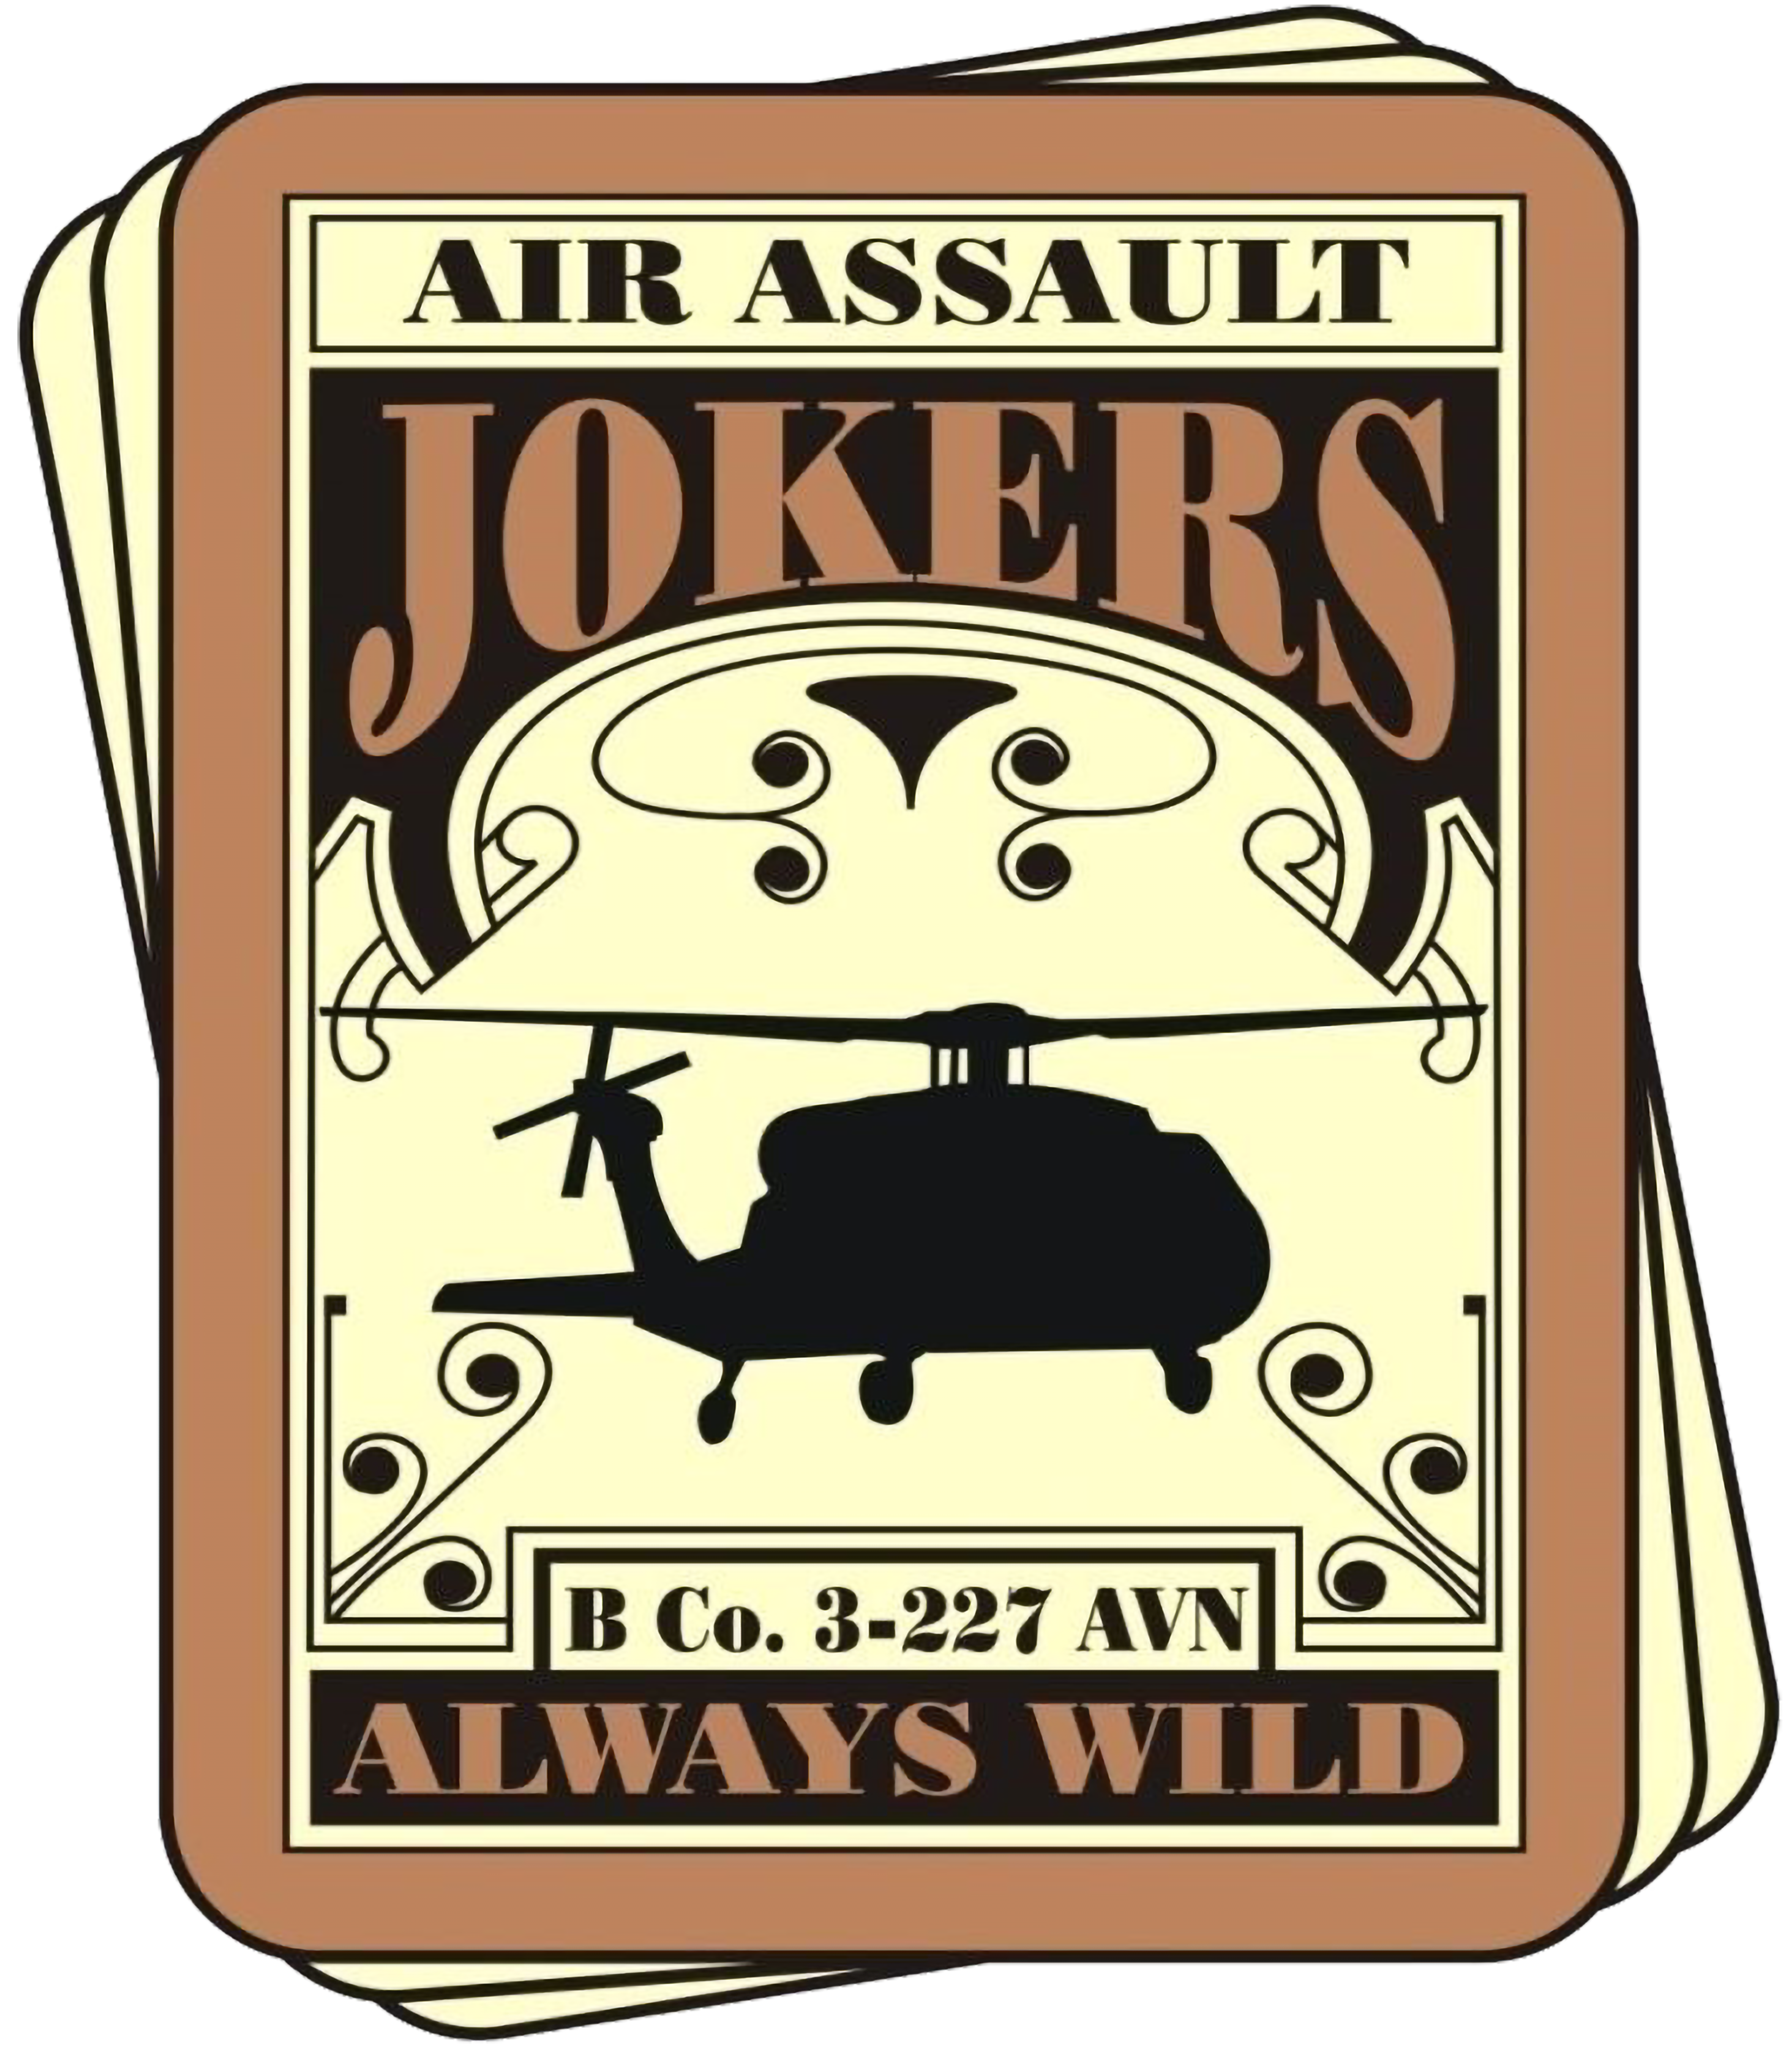 B Co, 3-227 AHB "Jokers"